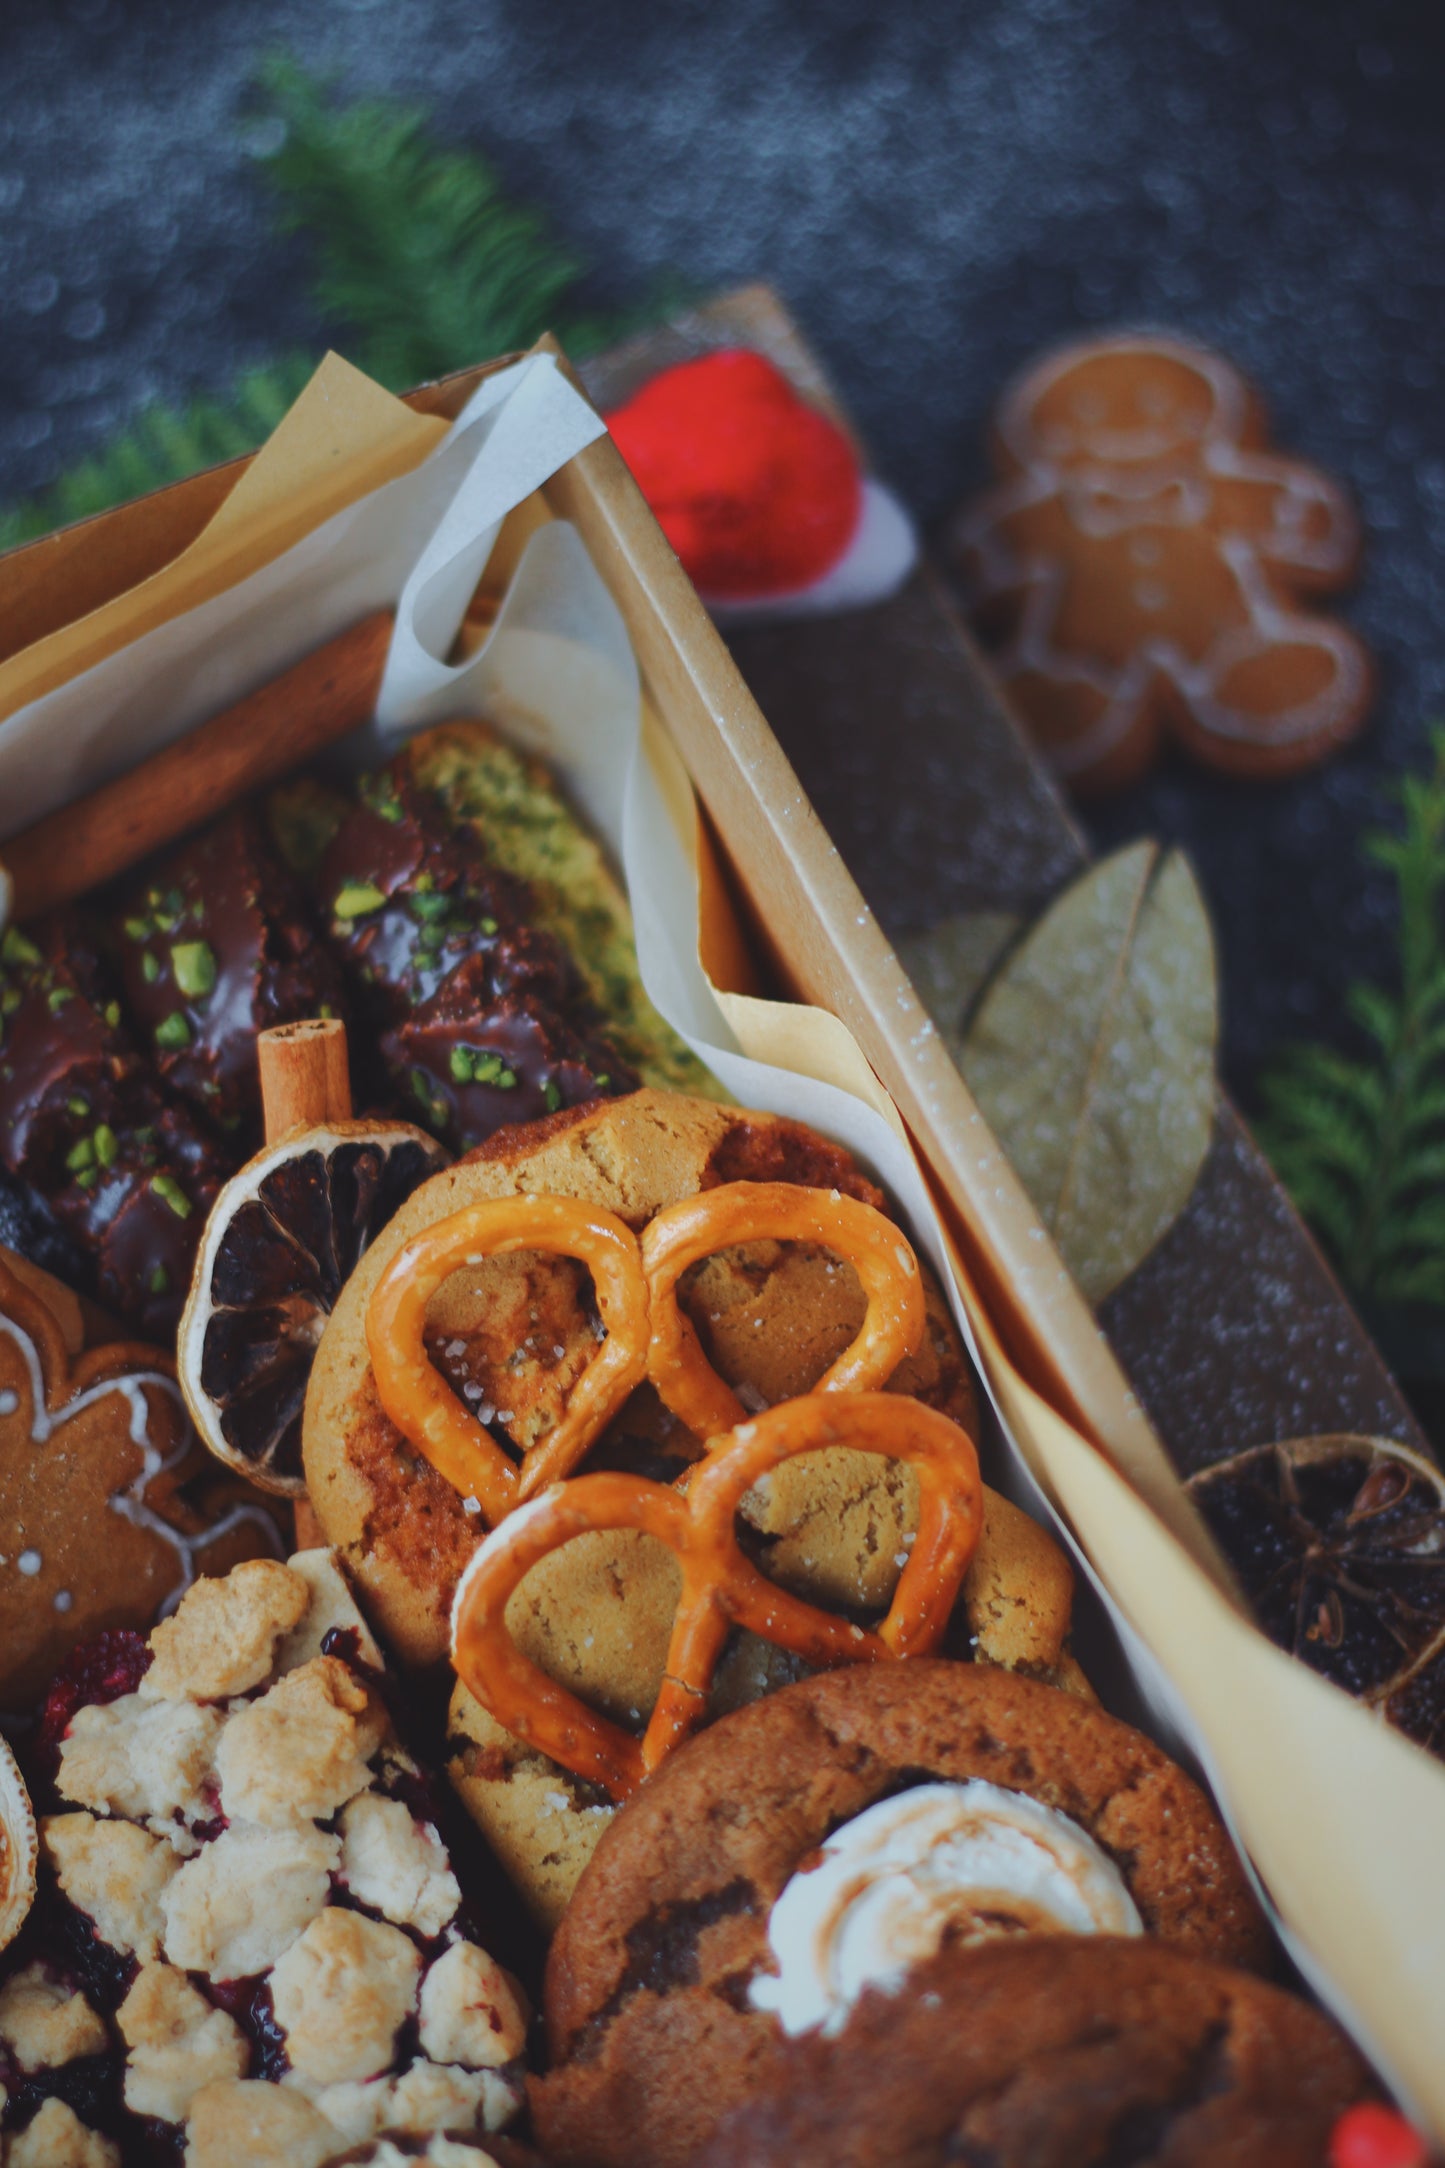 Twinkie Christmas Cookie Box